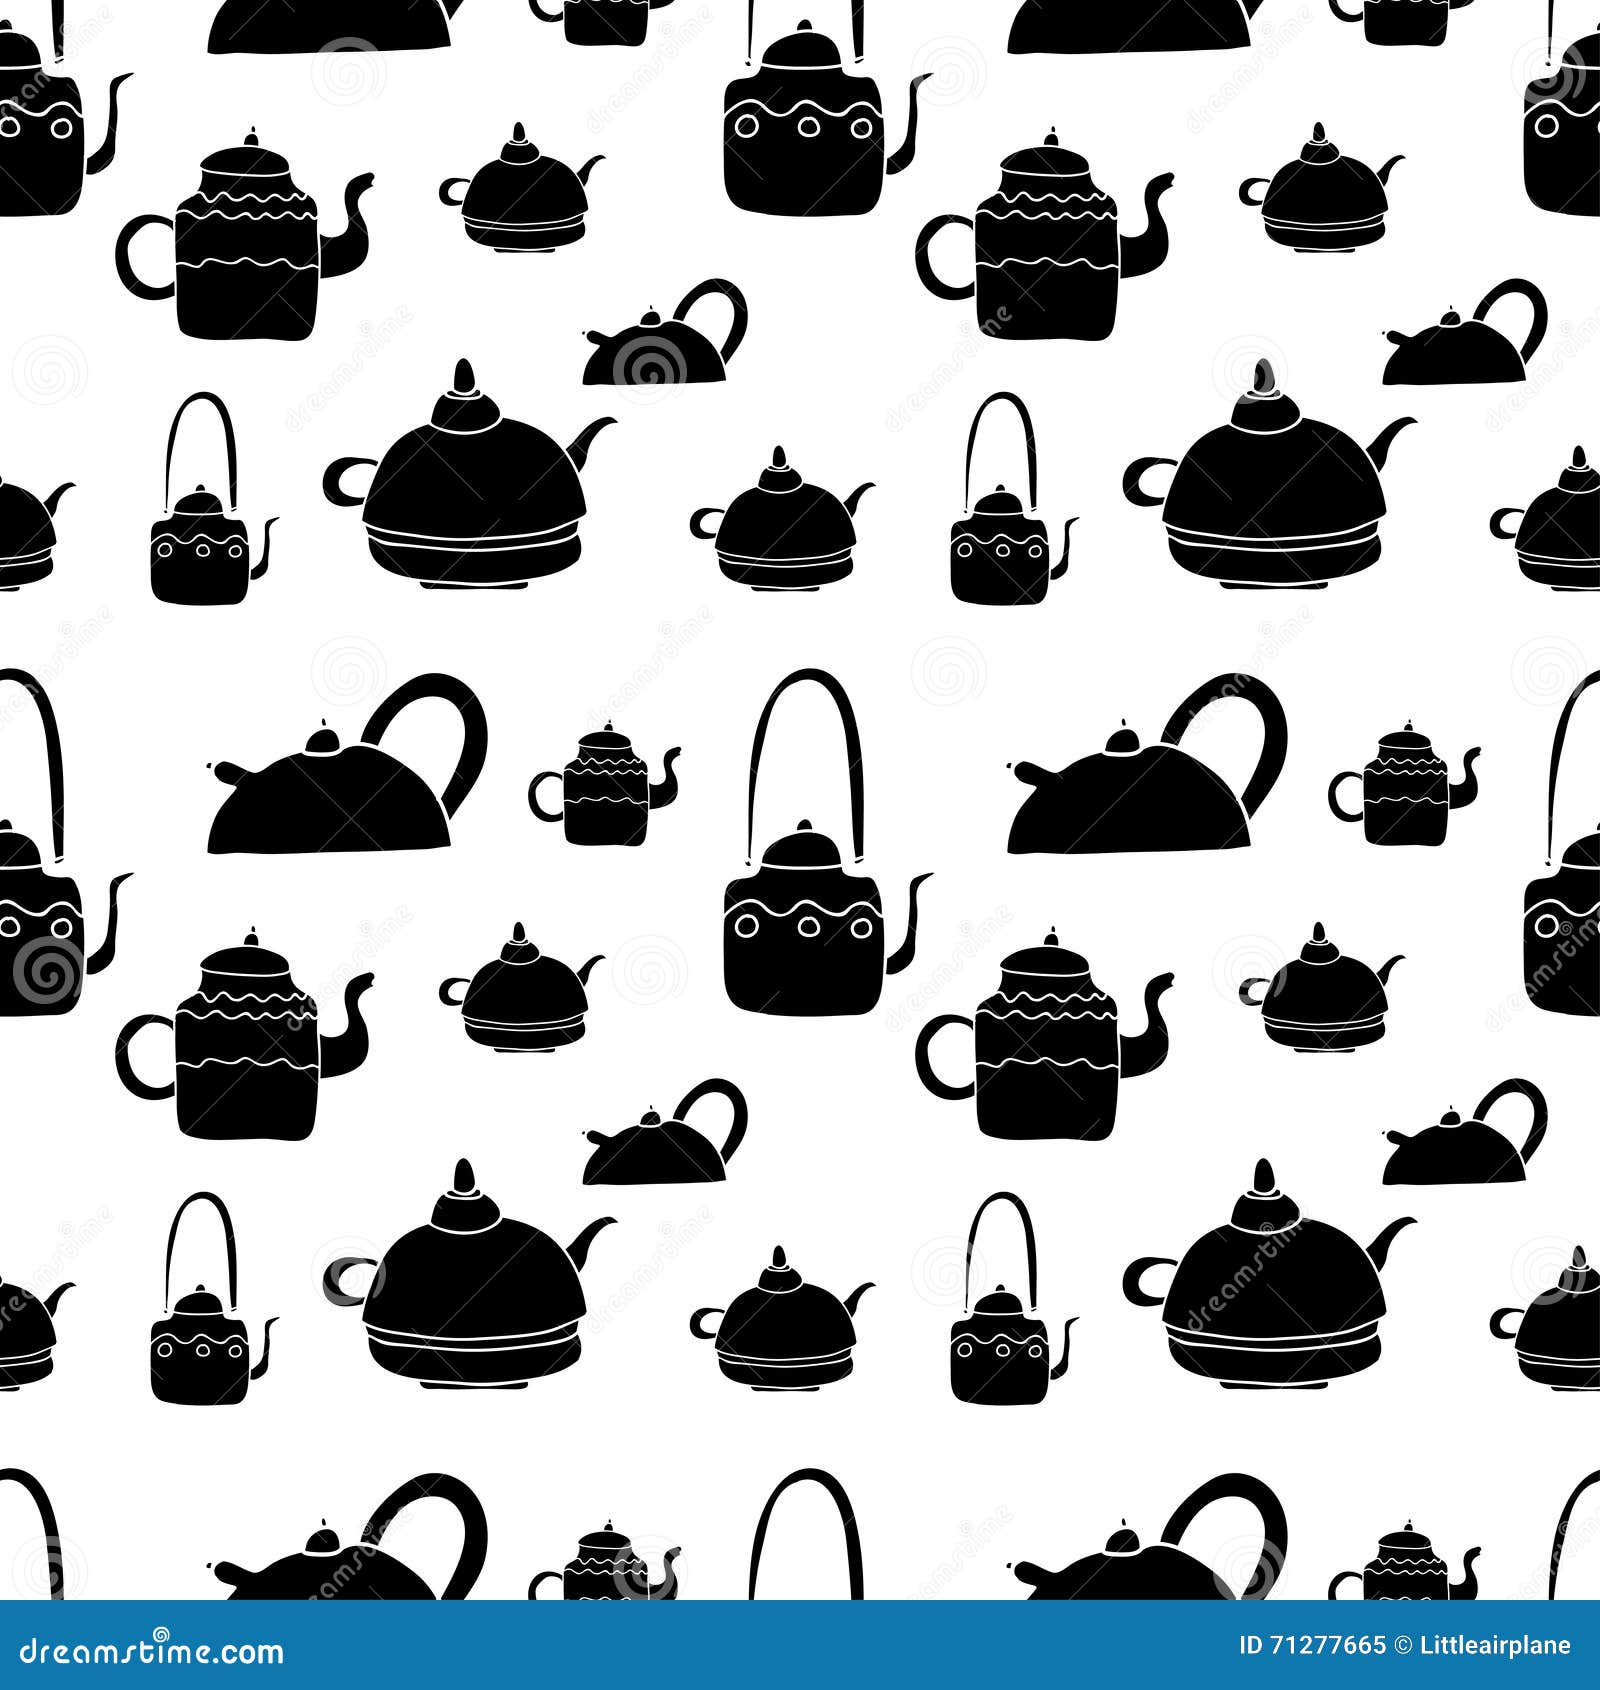 Tea kettle pattern bnw stock vector. Illustration of cake - 71277665